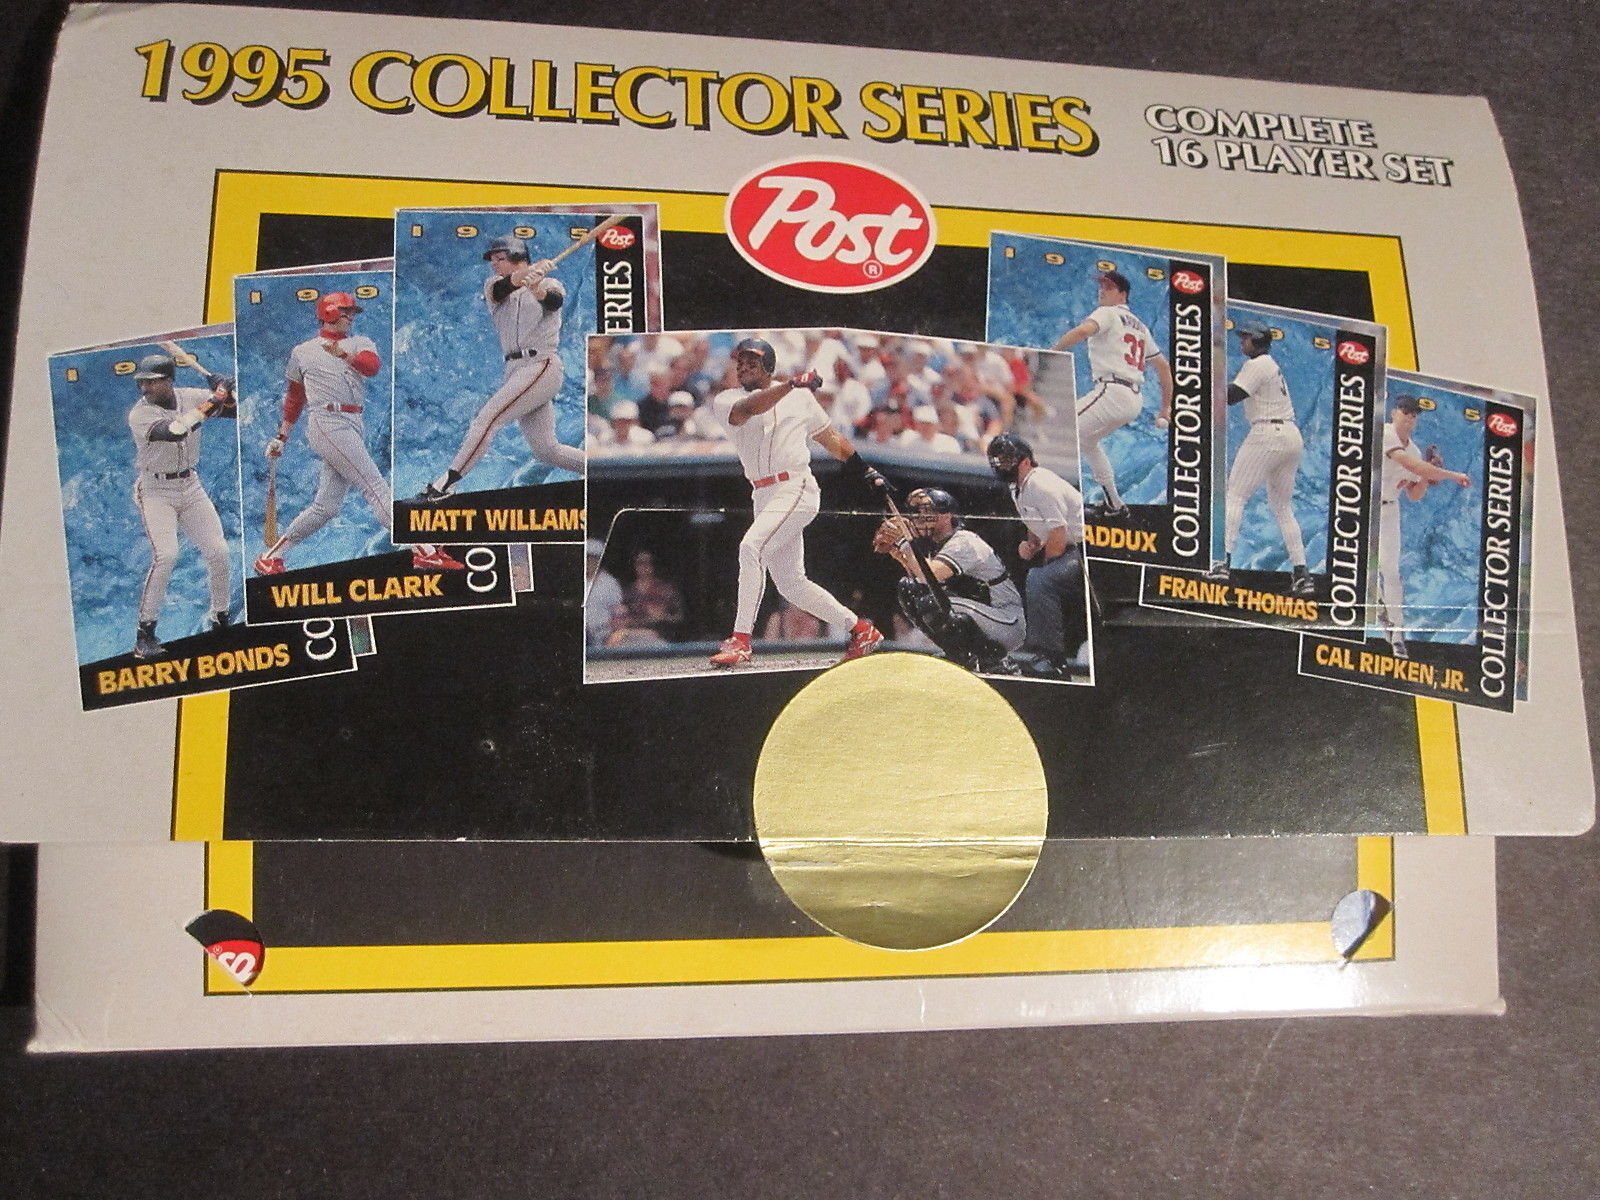 1995 Post Baseball Collector Series 16 player set Limited Edition Cal Ripken